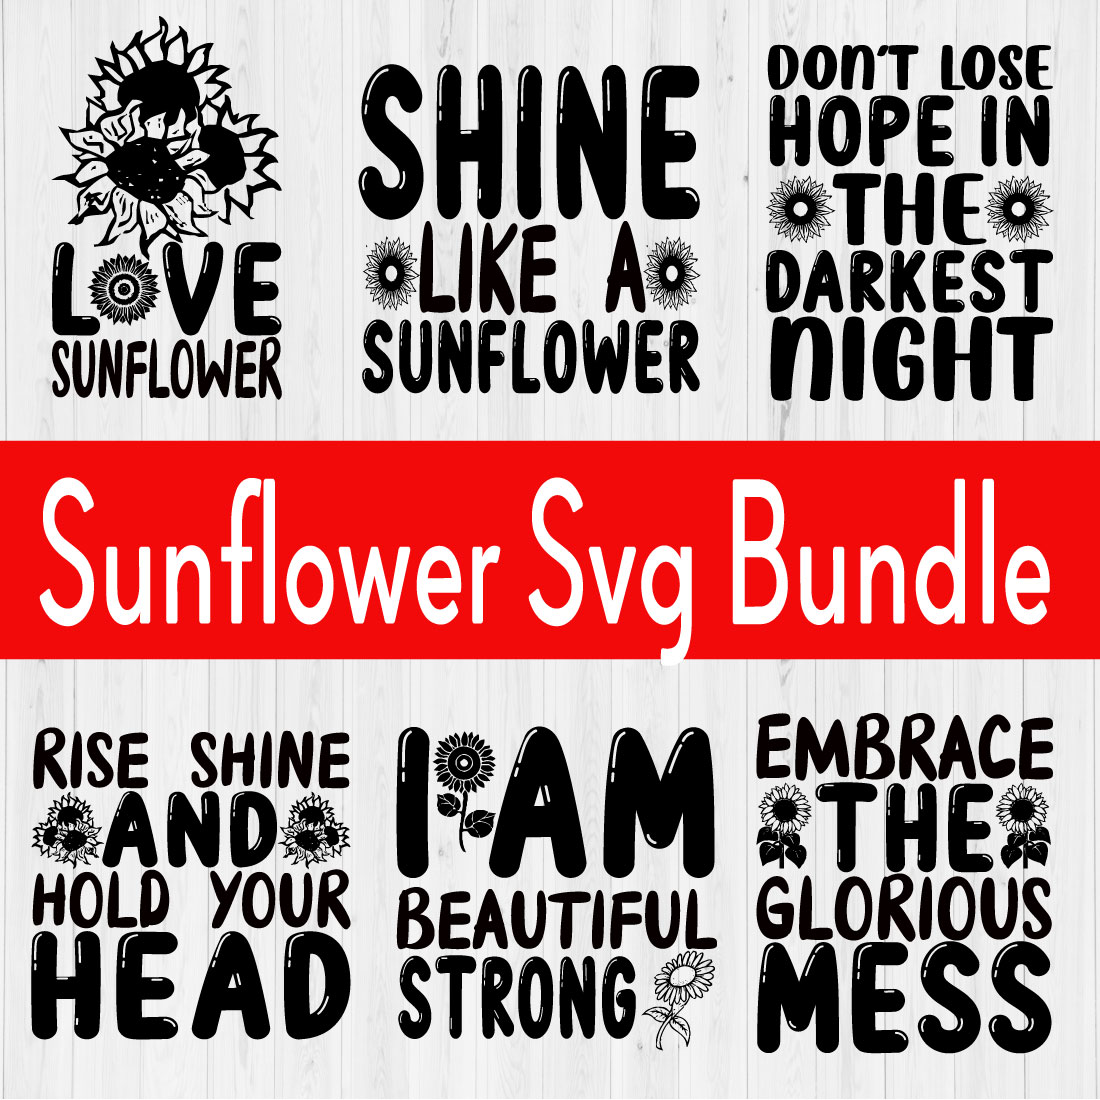 Sunflower T-shirt Design Bundle Vol3 cover image.